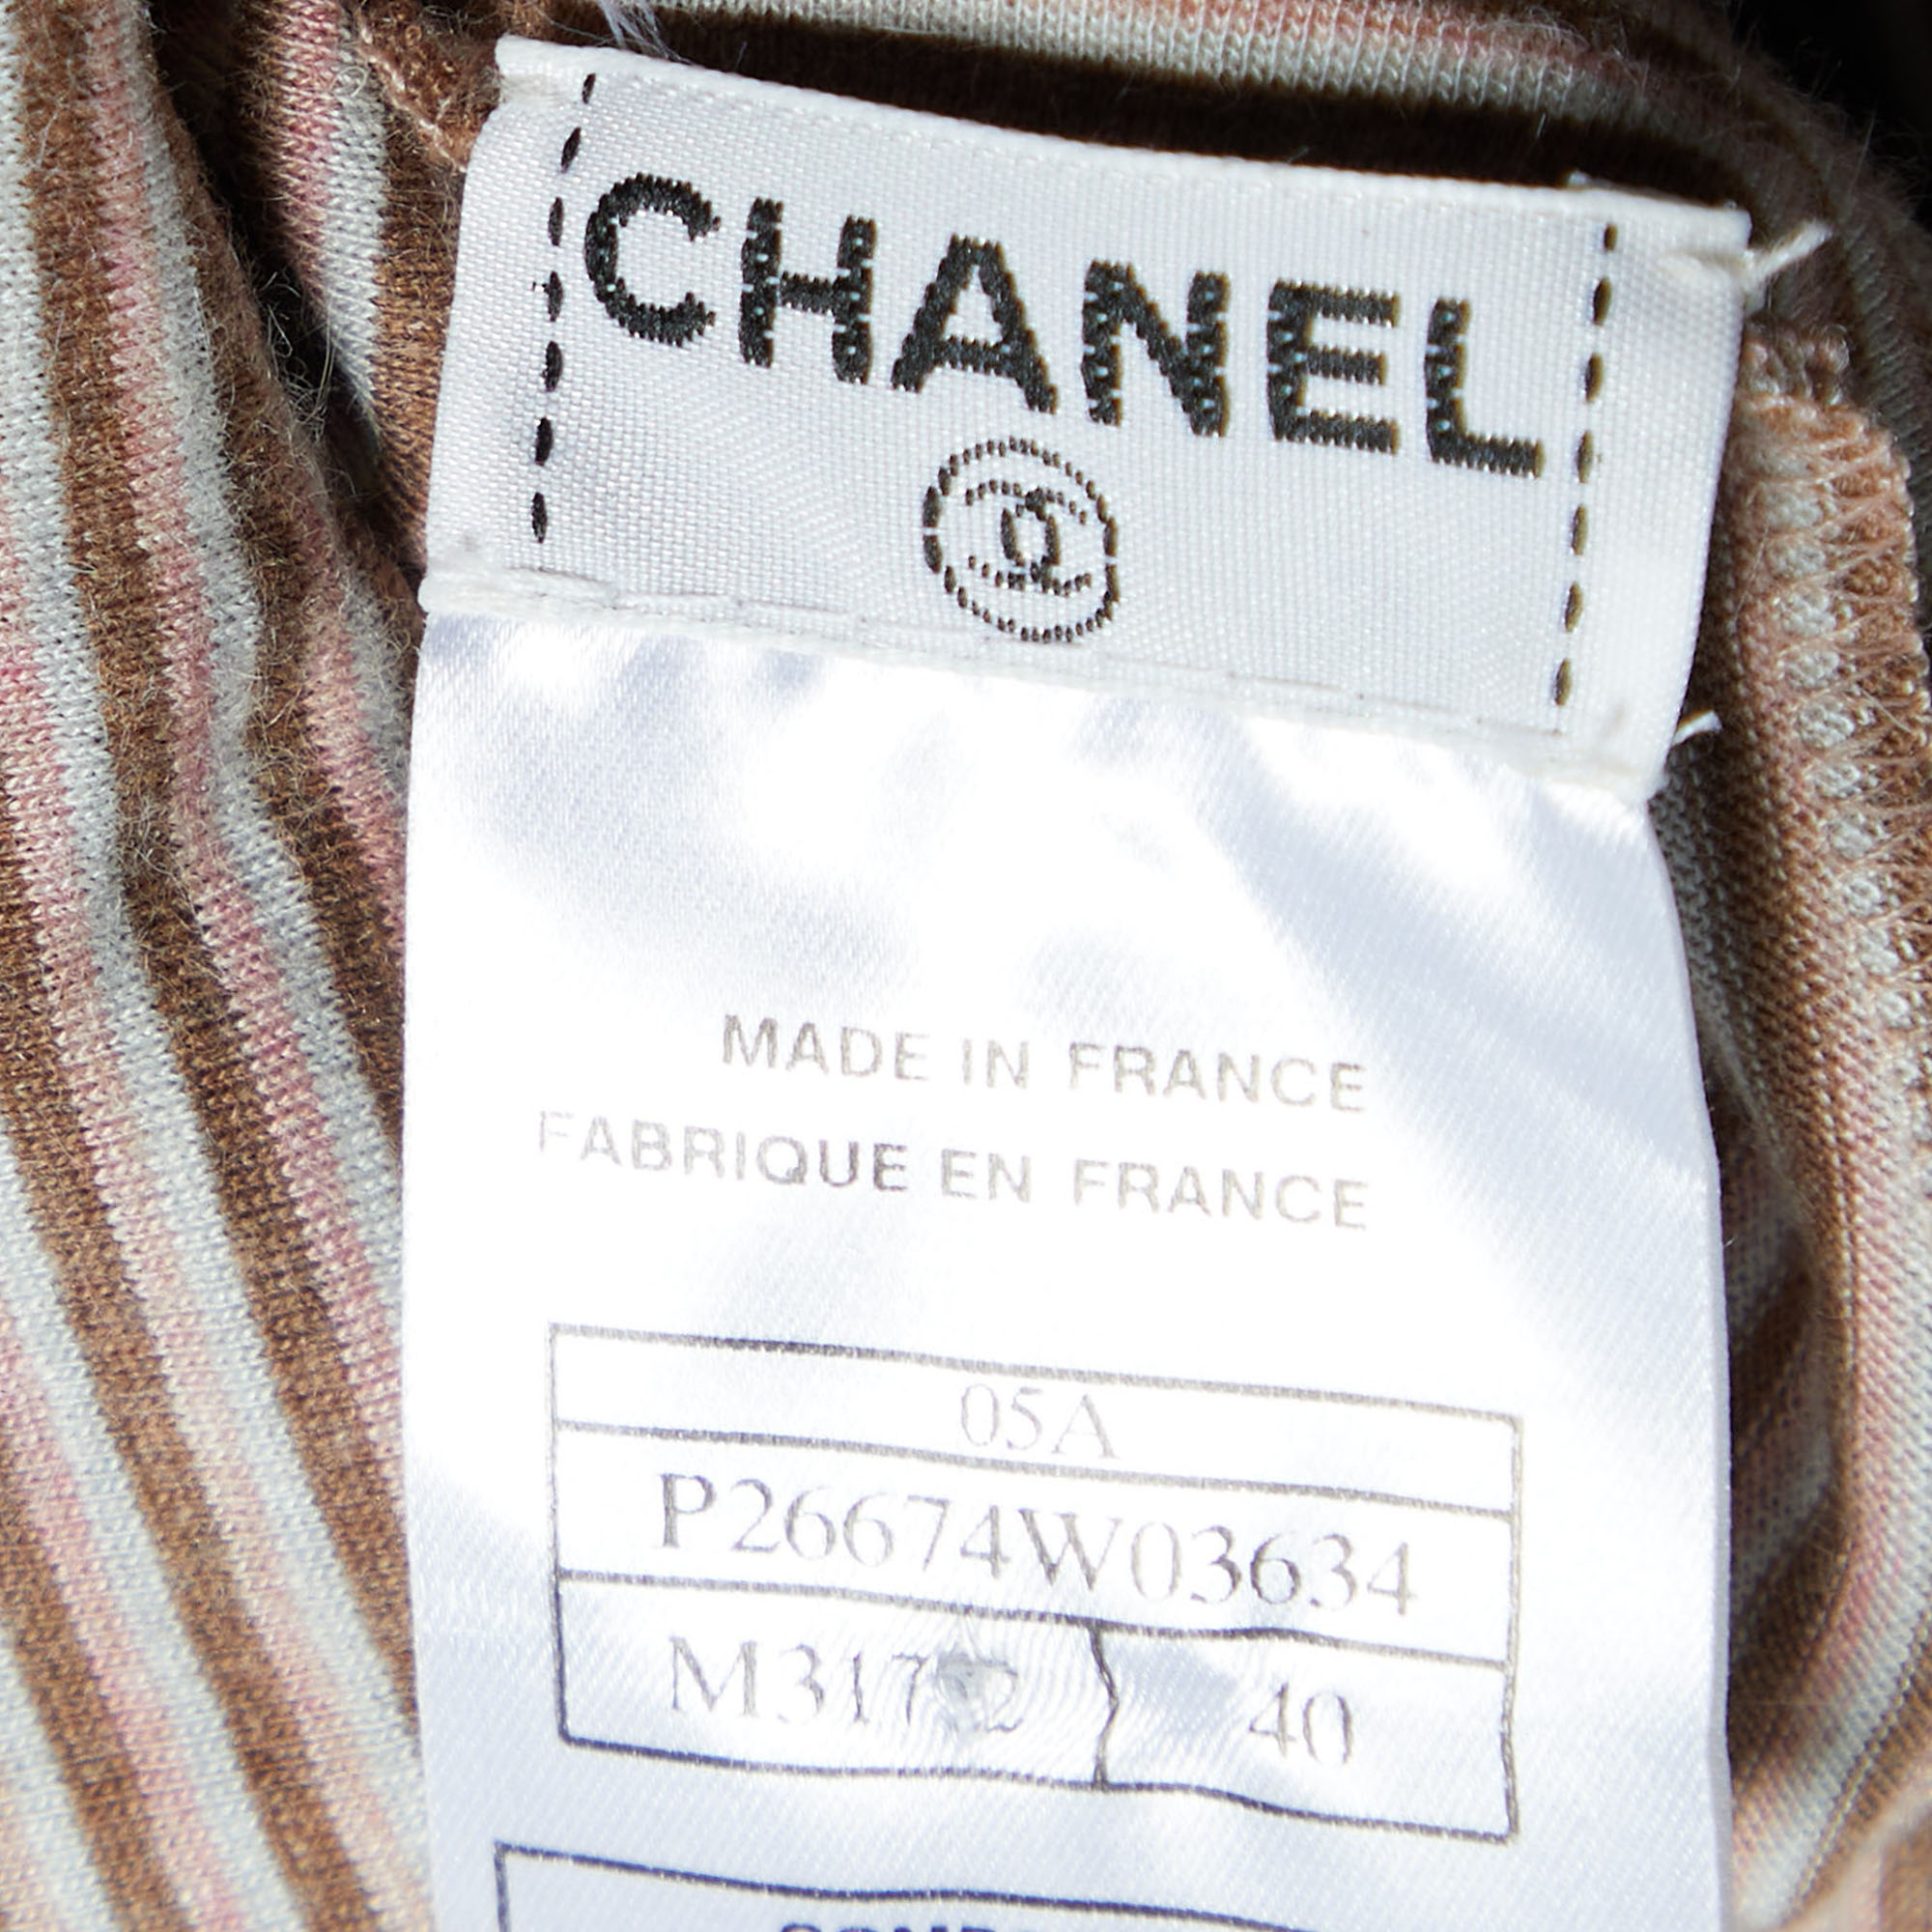 Chanel Brown/Peach Striped Cotton & Angora Knit Turtleneck Sweater M